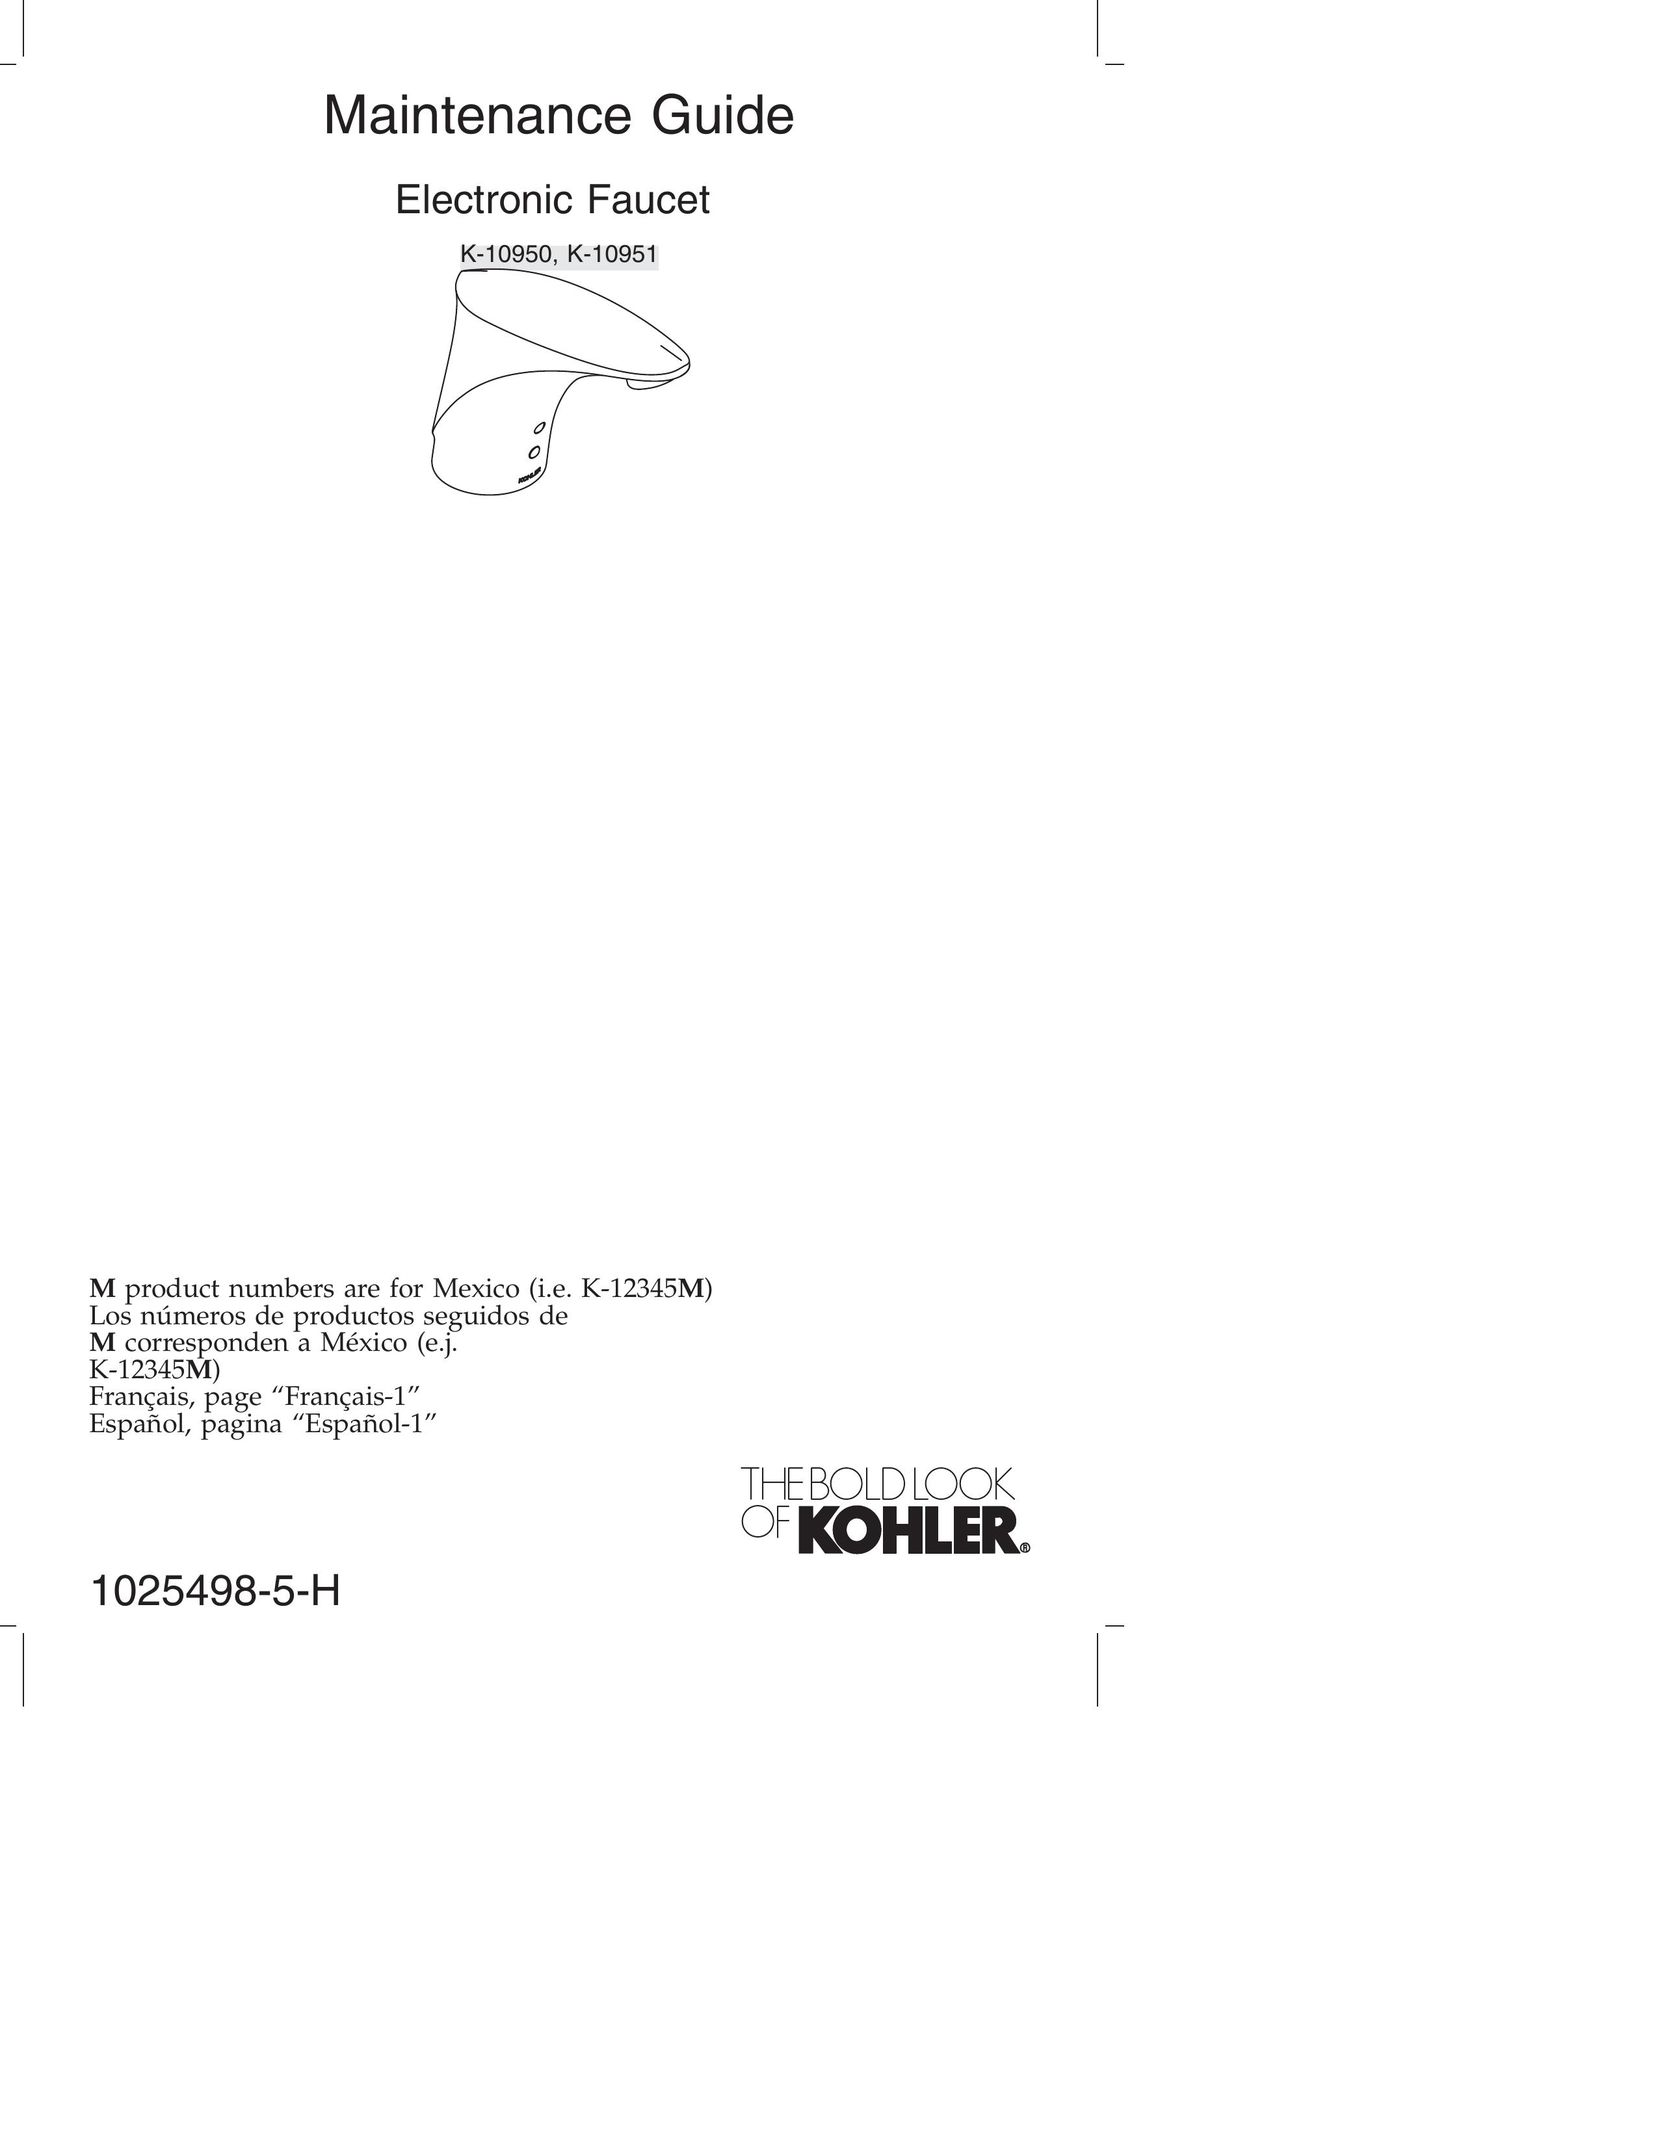 Kohler k-10951 Plumbing Product User Manual